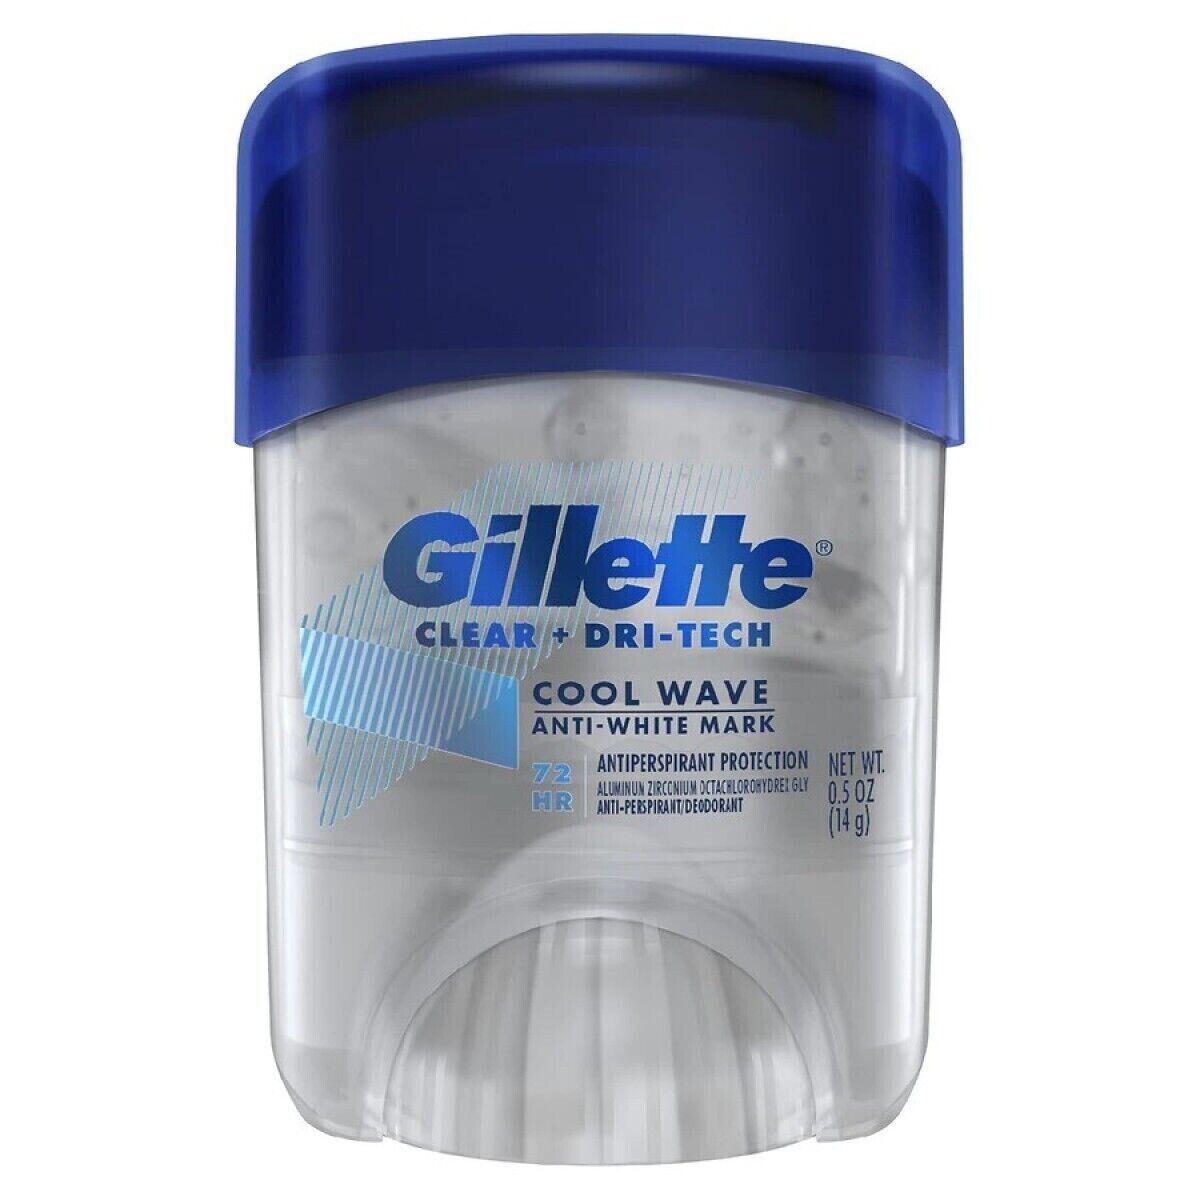 Gillette Antiperspirant Deodorant 0.5-oz 14-g Cool Wave Scent Xtend